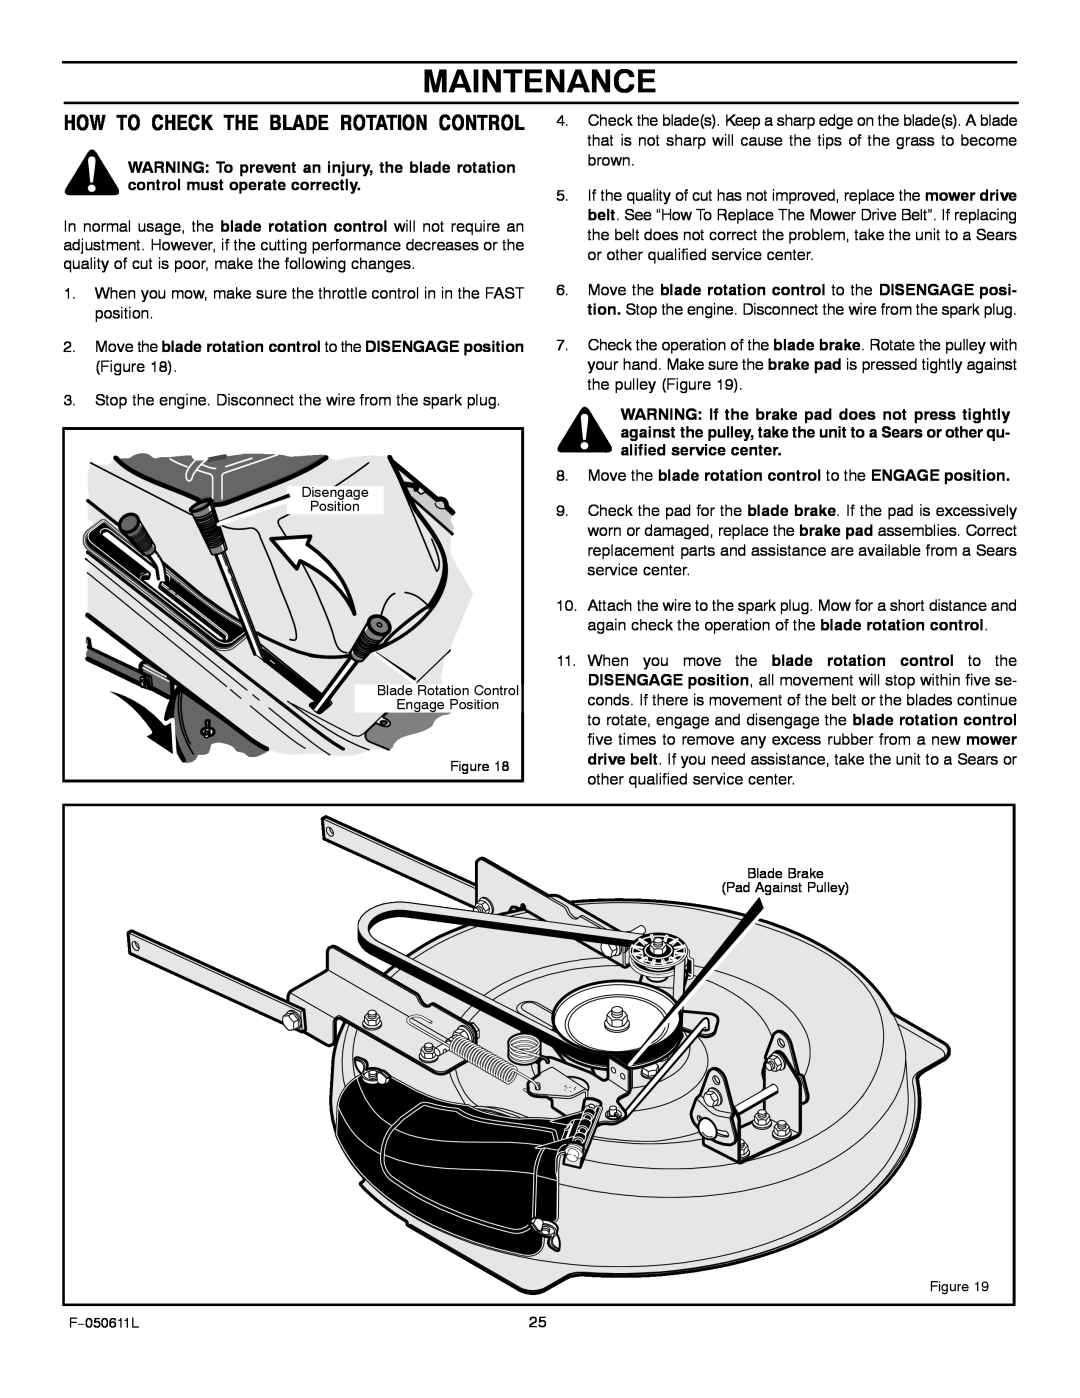 Murray 309007x8B manual Maintenance, How To Check The Blade Rotation Control 